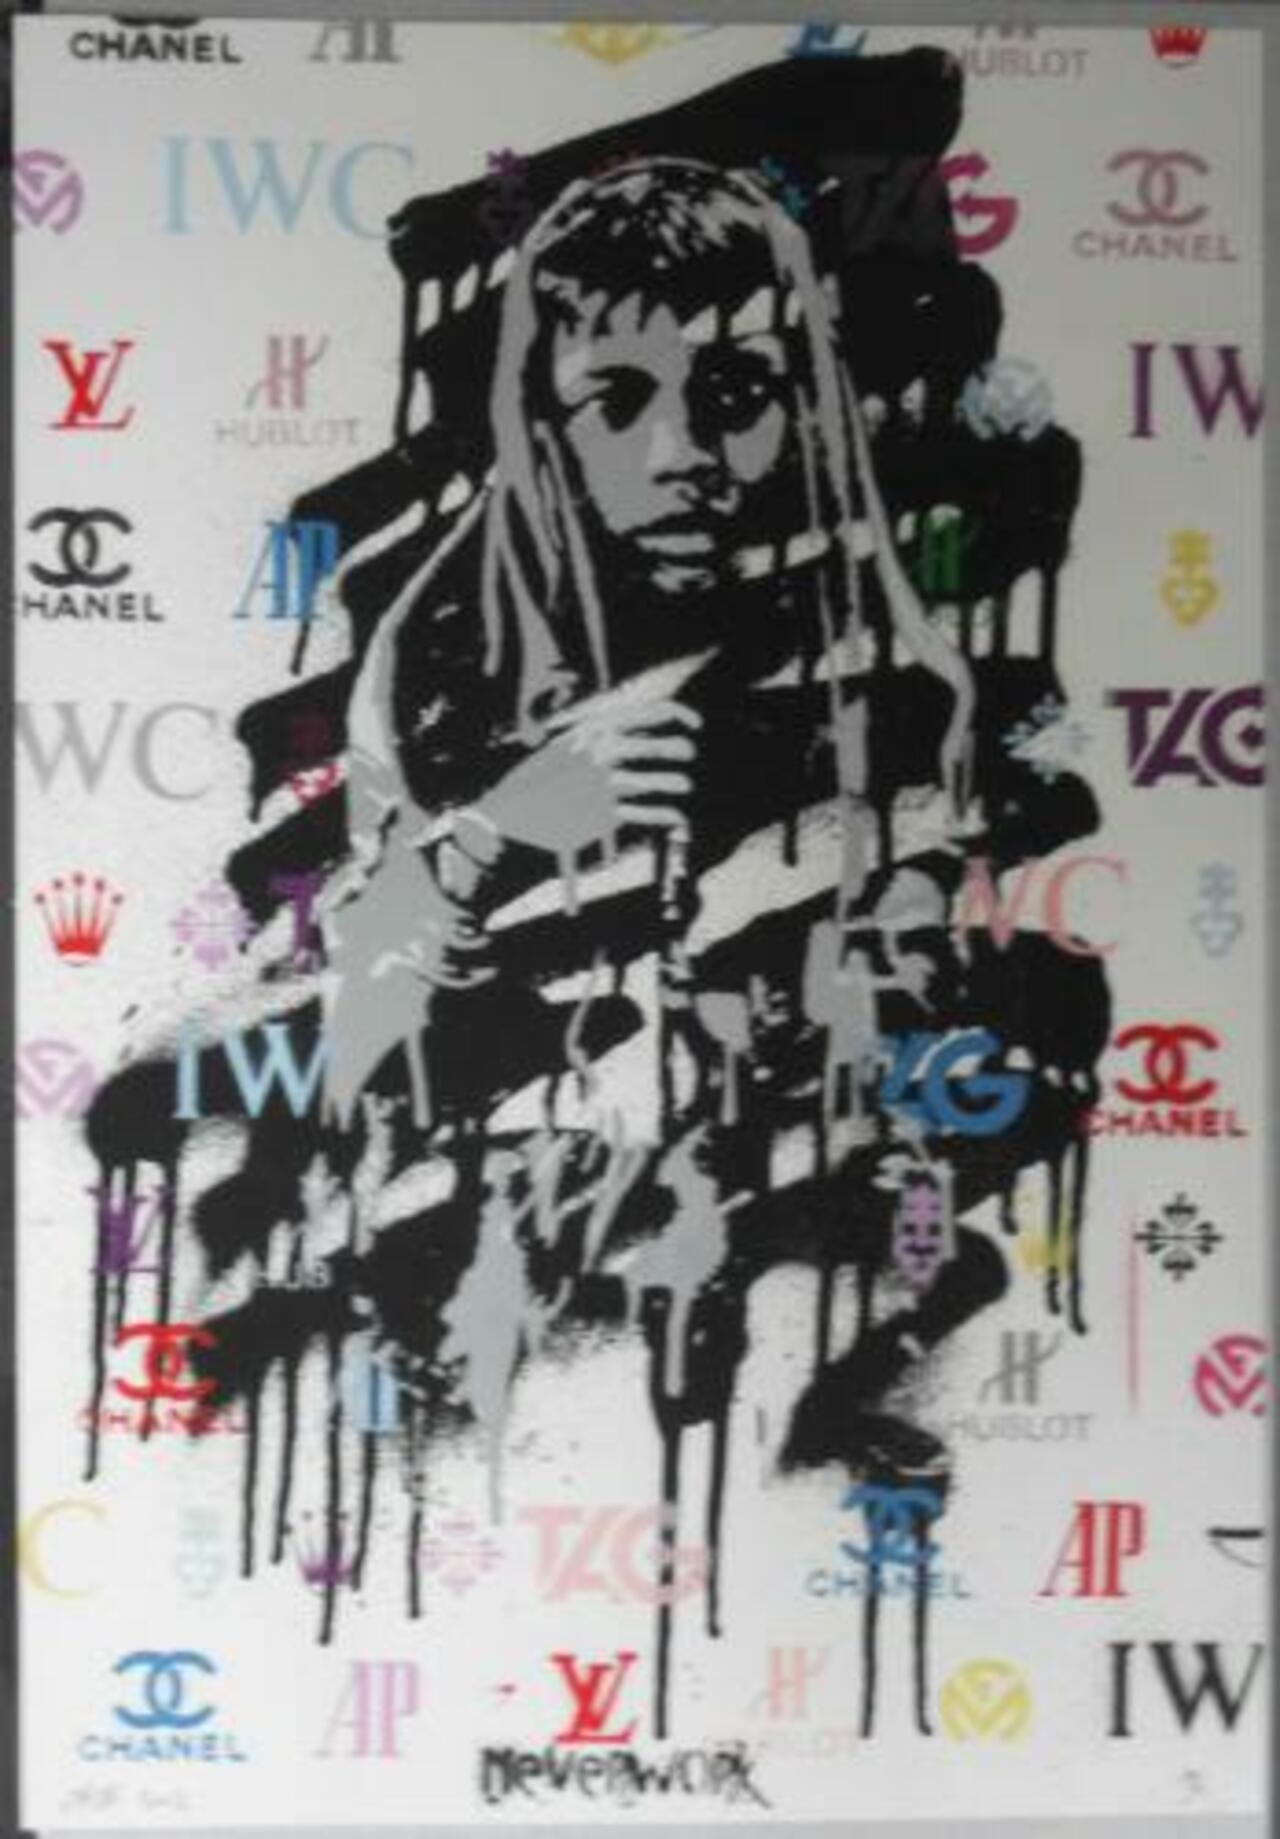 NEVERWORK - BEGGER GIRL - http://admireurbanart.bigcartel.com/product/neverwork-begger-girl-2012-handfinished-artist-proof-of-5 #art #print #urbanart #stencil #streetartnorway #newyork #graffiti http://t.co/sUvvbRewlm